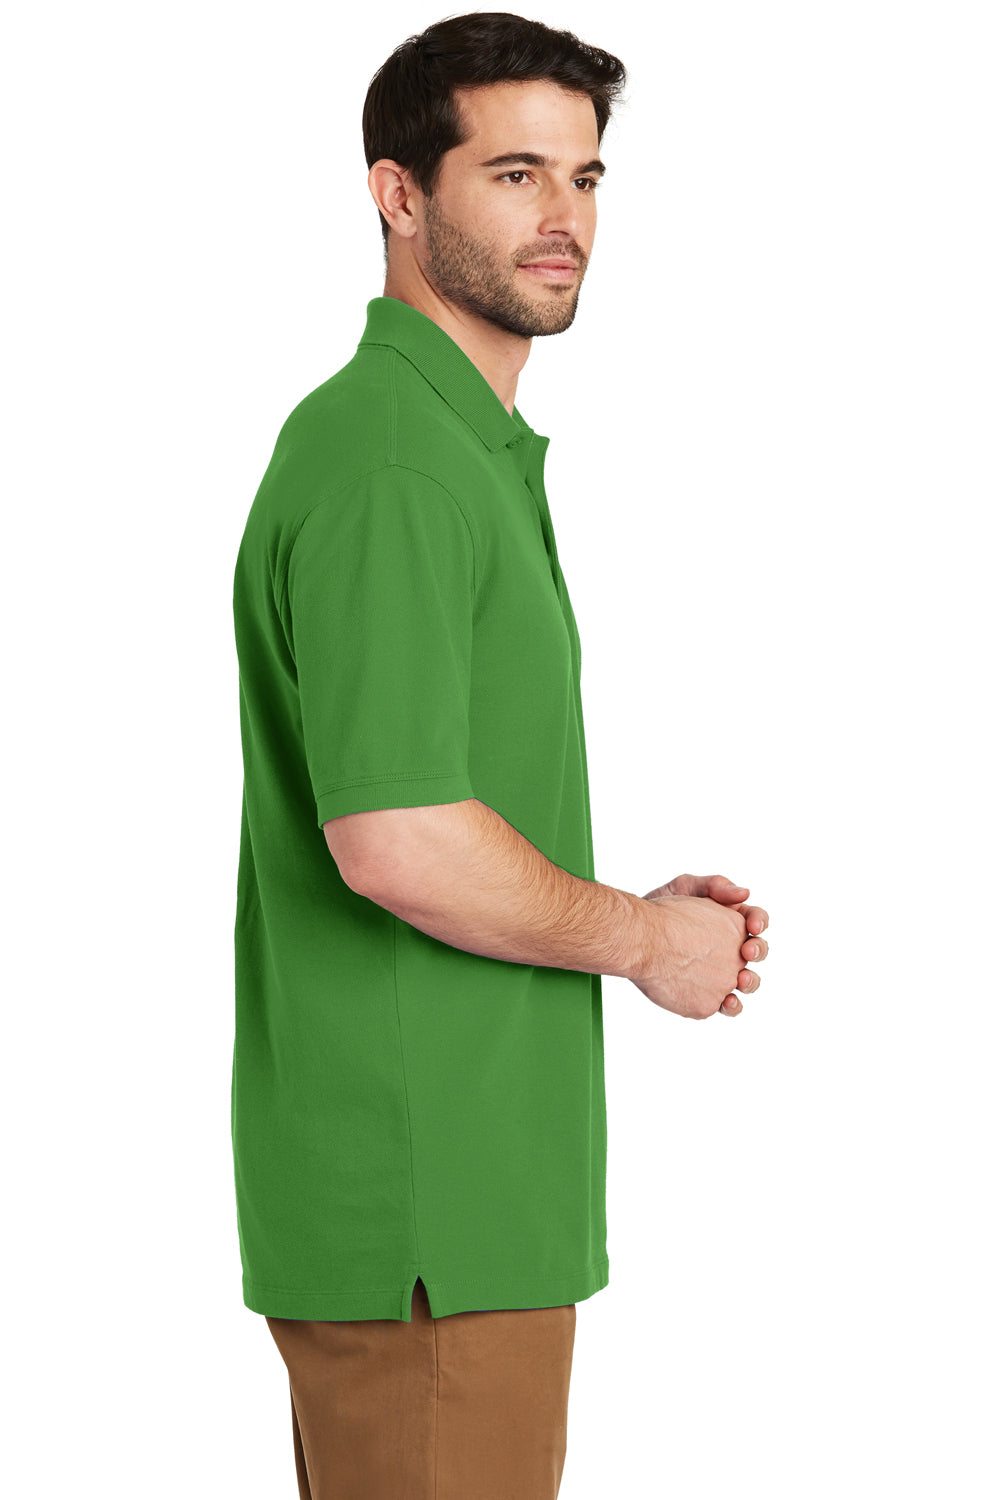 Port Authority K8000 Mens Wrinkle Resistant Short Sleeve Polo Shirt Vine Green Side